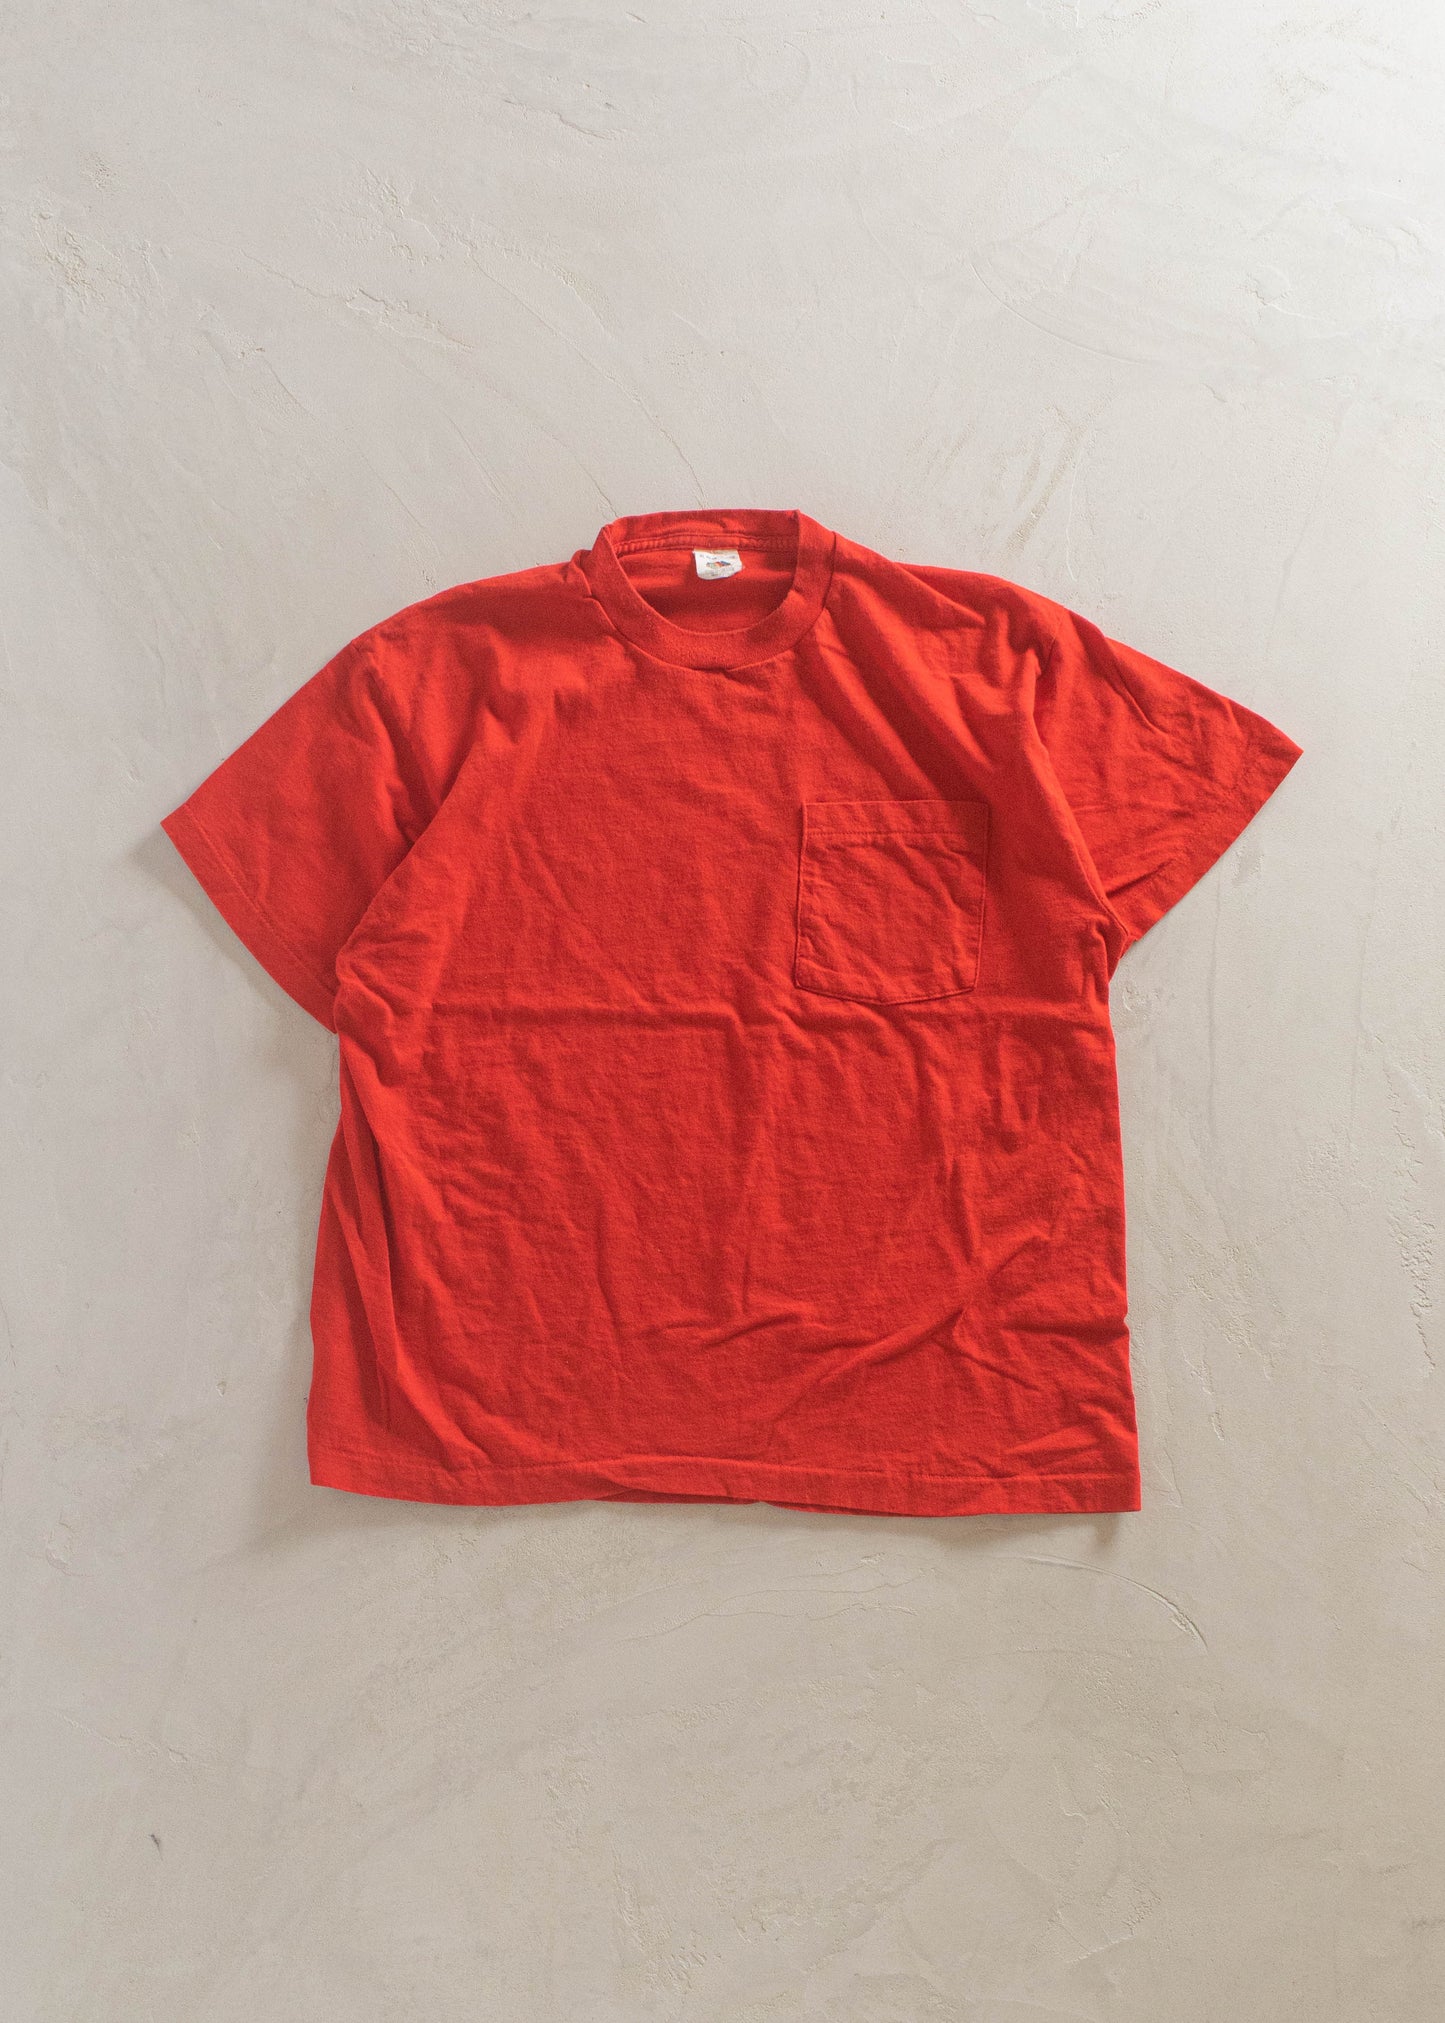 1980s Fruit of the Loom Selvedge Pocket T-Shirt Size M/L